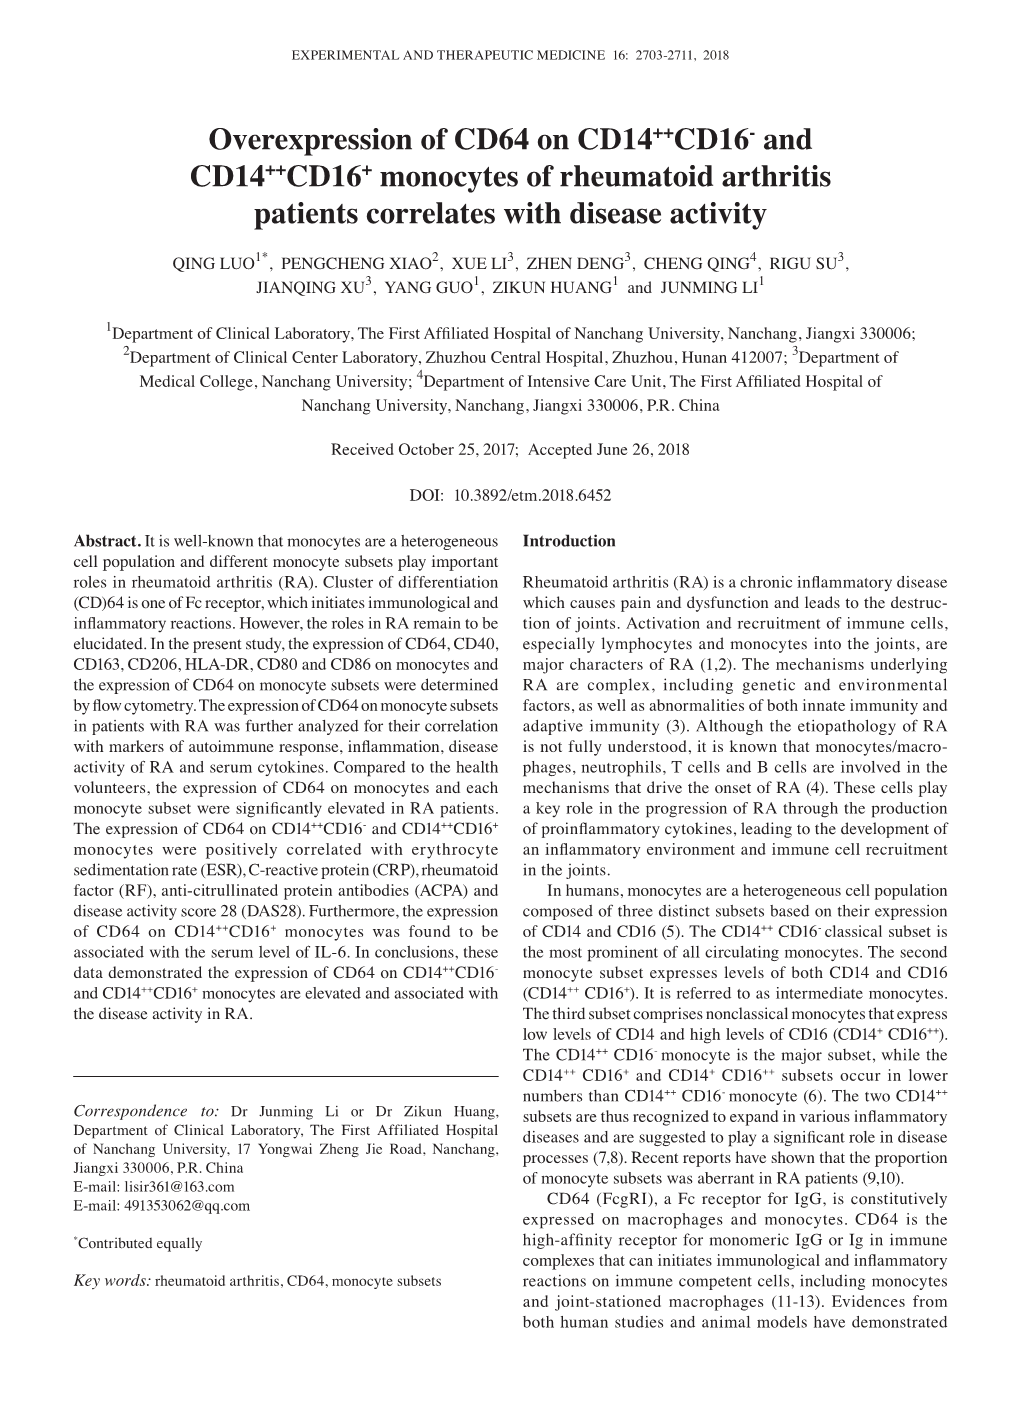 And CD14++CD16+ Monocytes of Rheumatoid Arthritis Patients Correlates with Disease Activity